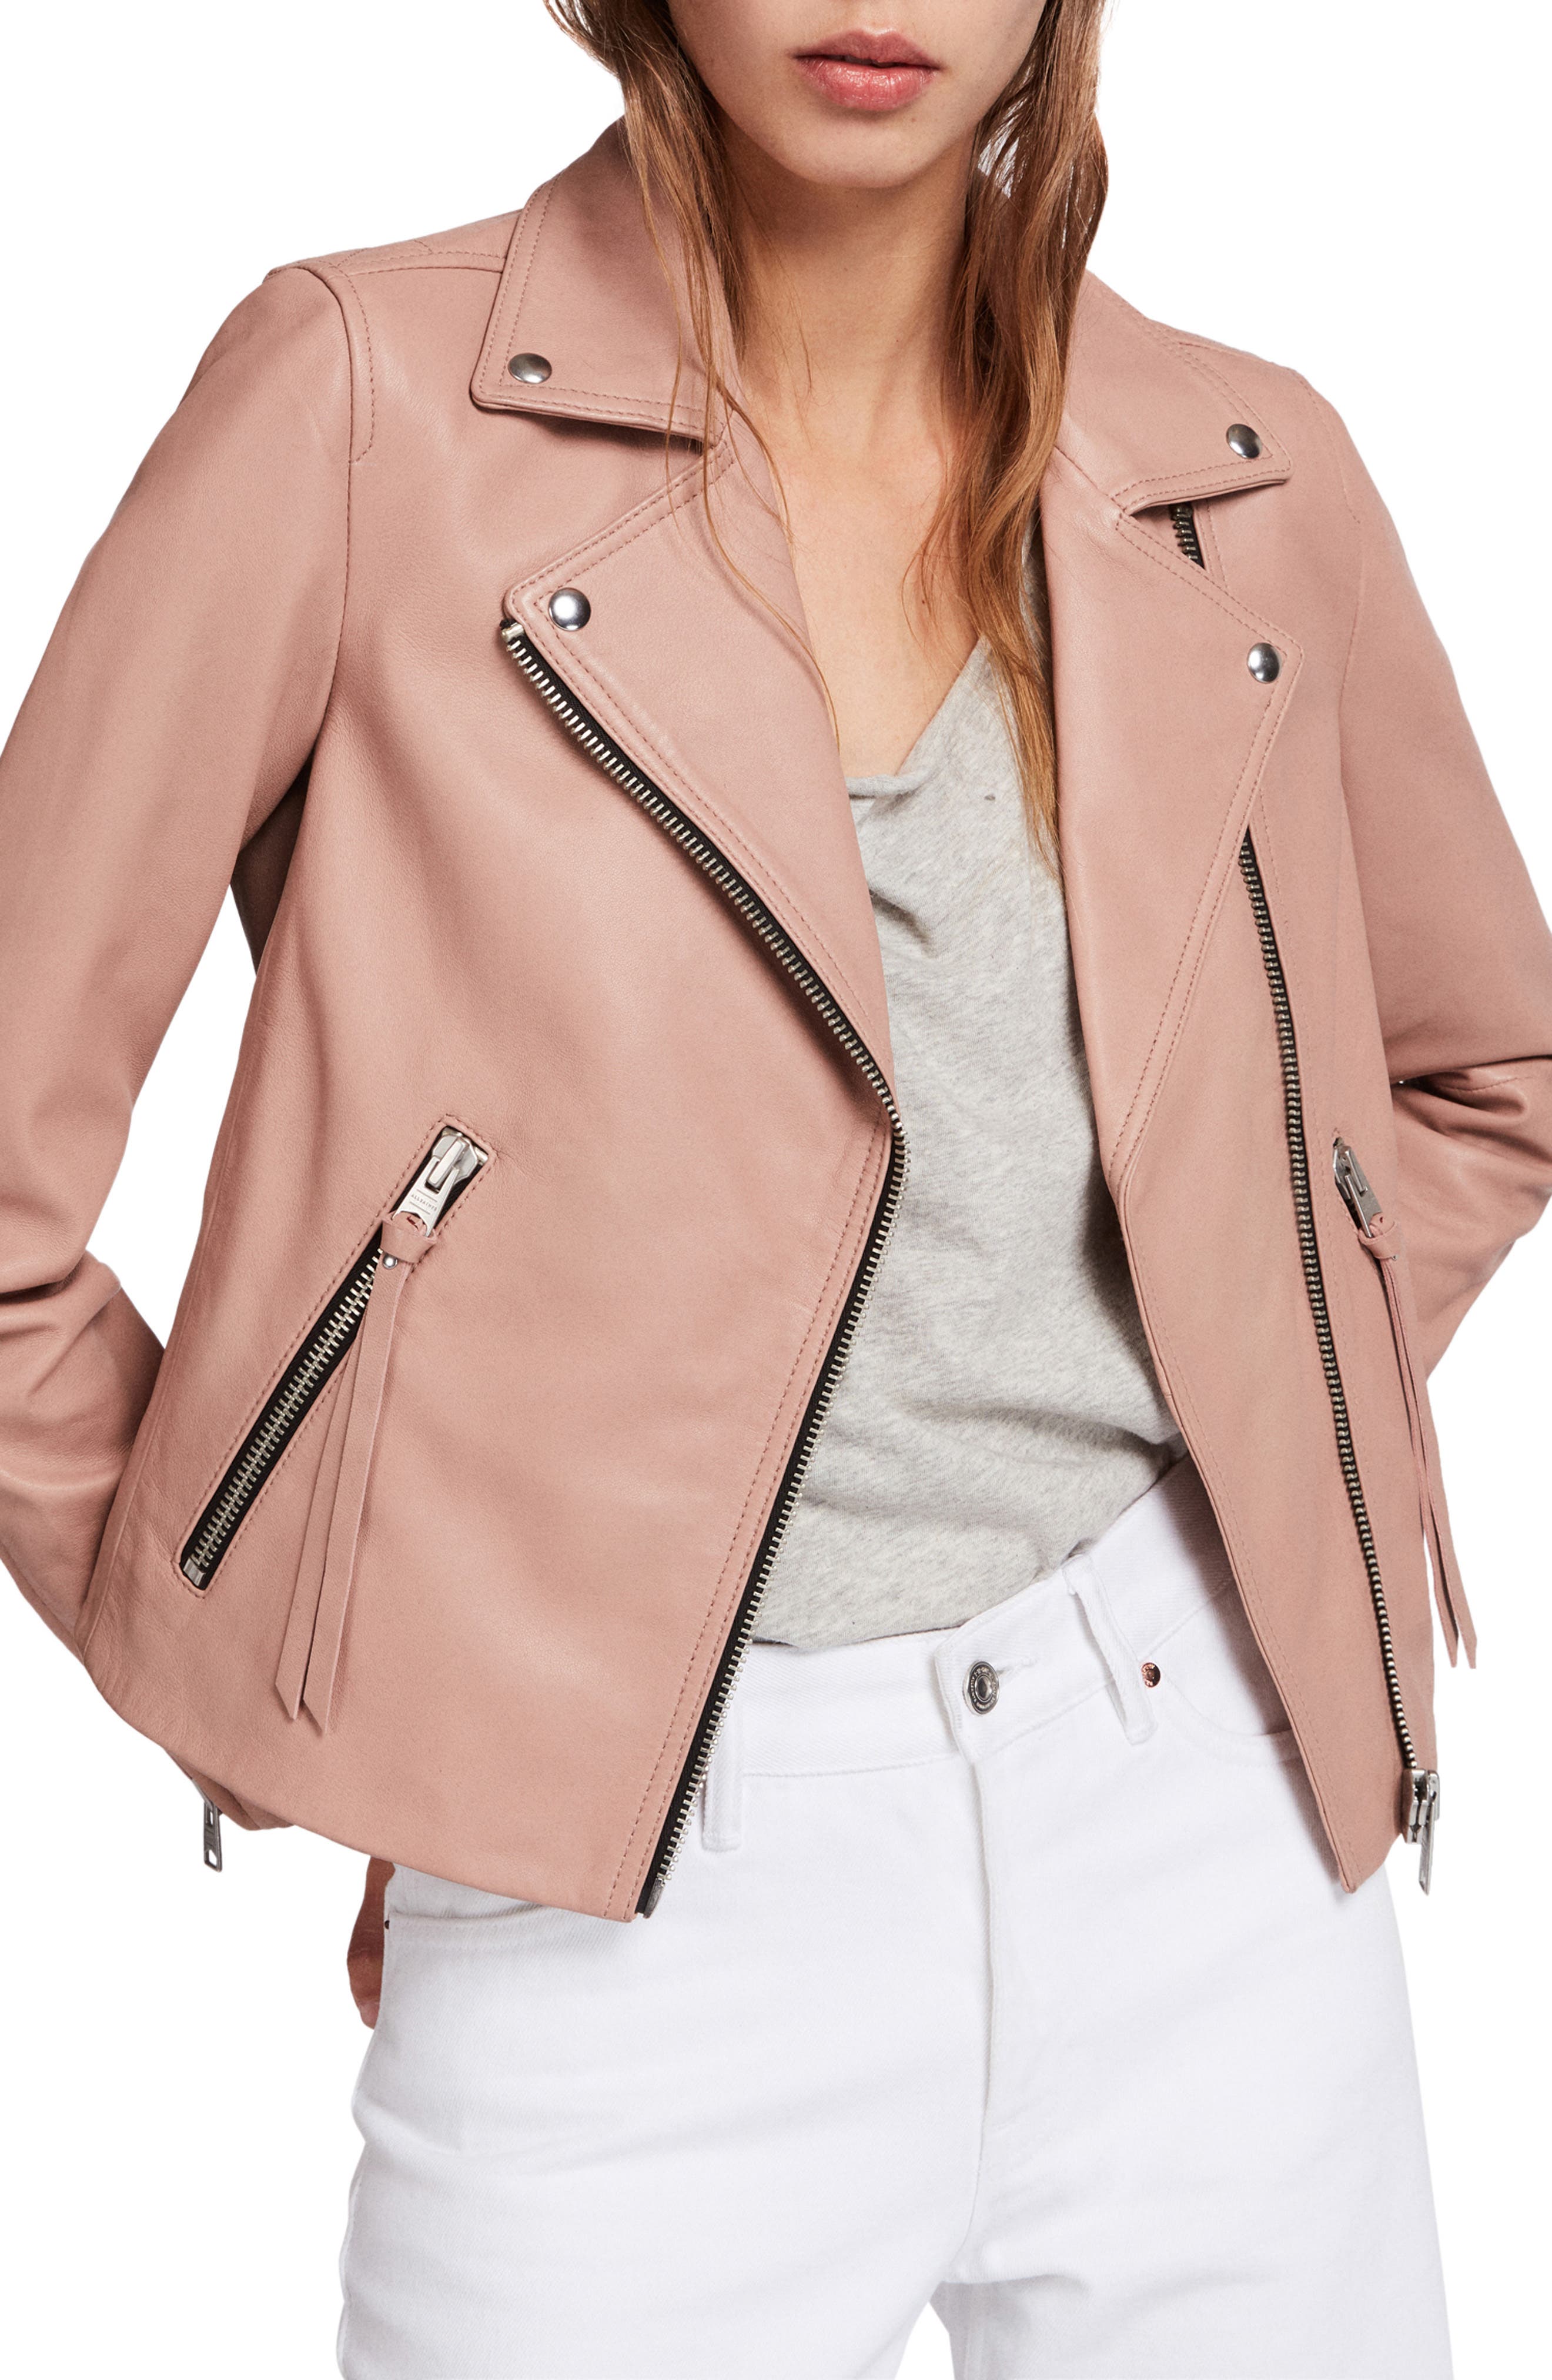 Kate Hot Pink Ladies Women's Biker Style Fashion Retro Real Sheep Leather Jacket 